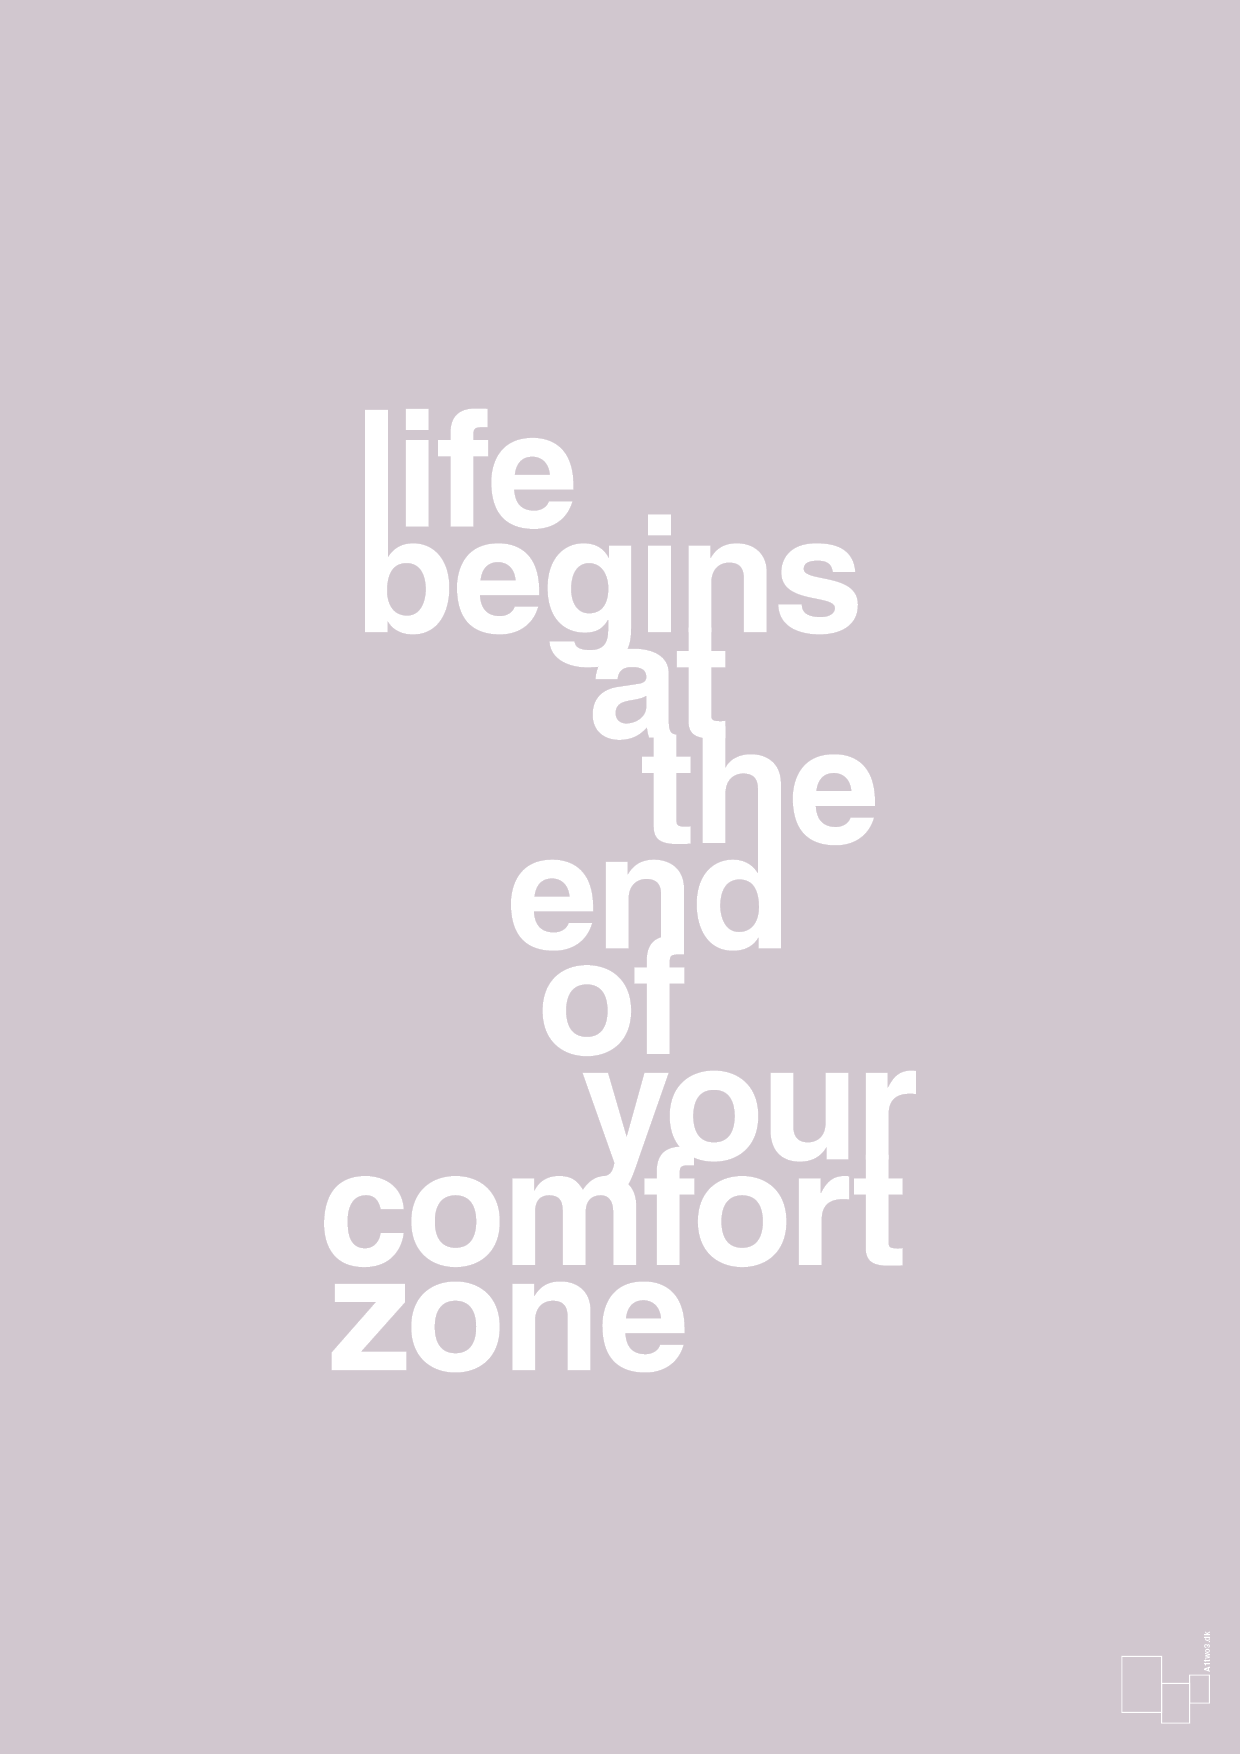 life begins at the end of your comfort zone - Plakat med Ordsprog i Dusty Lilac